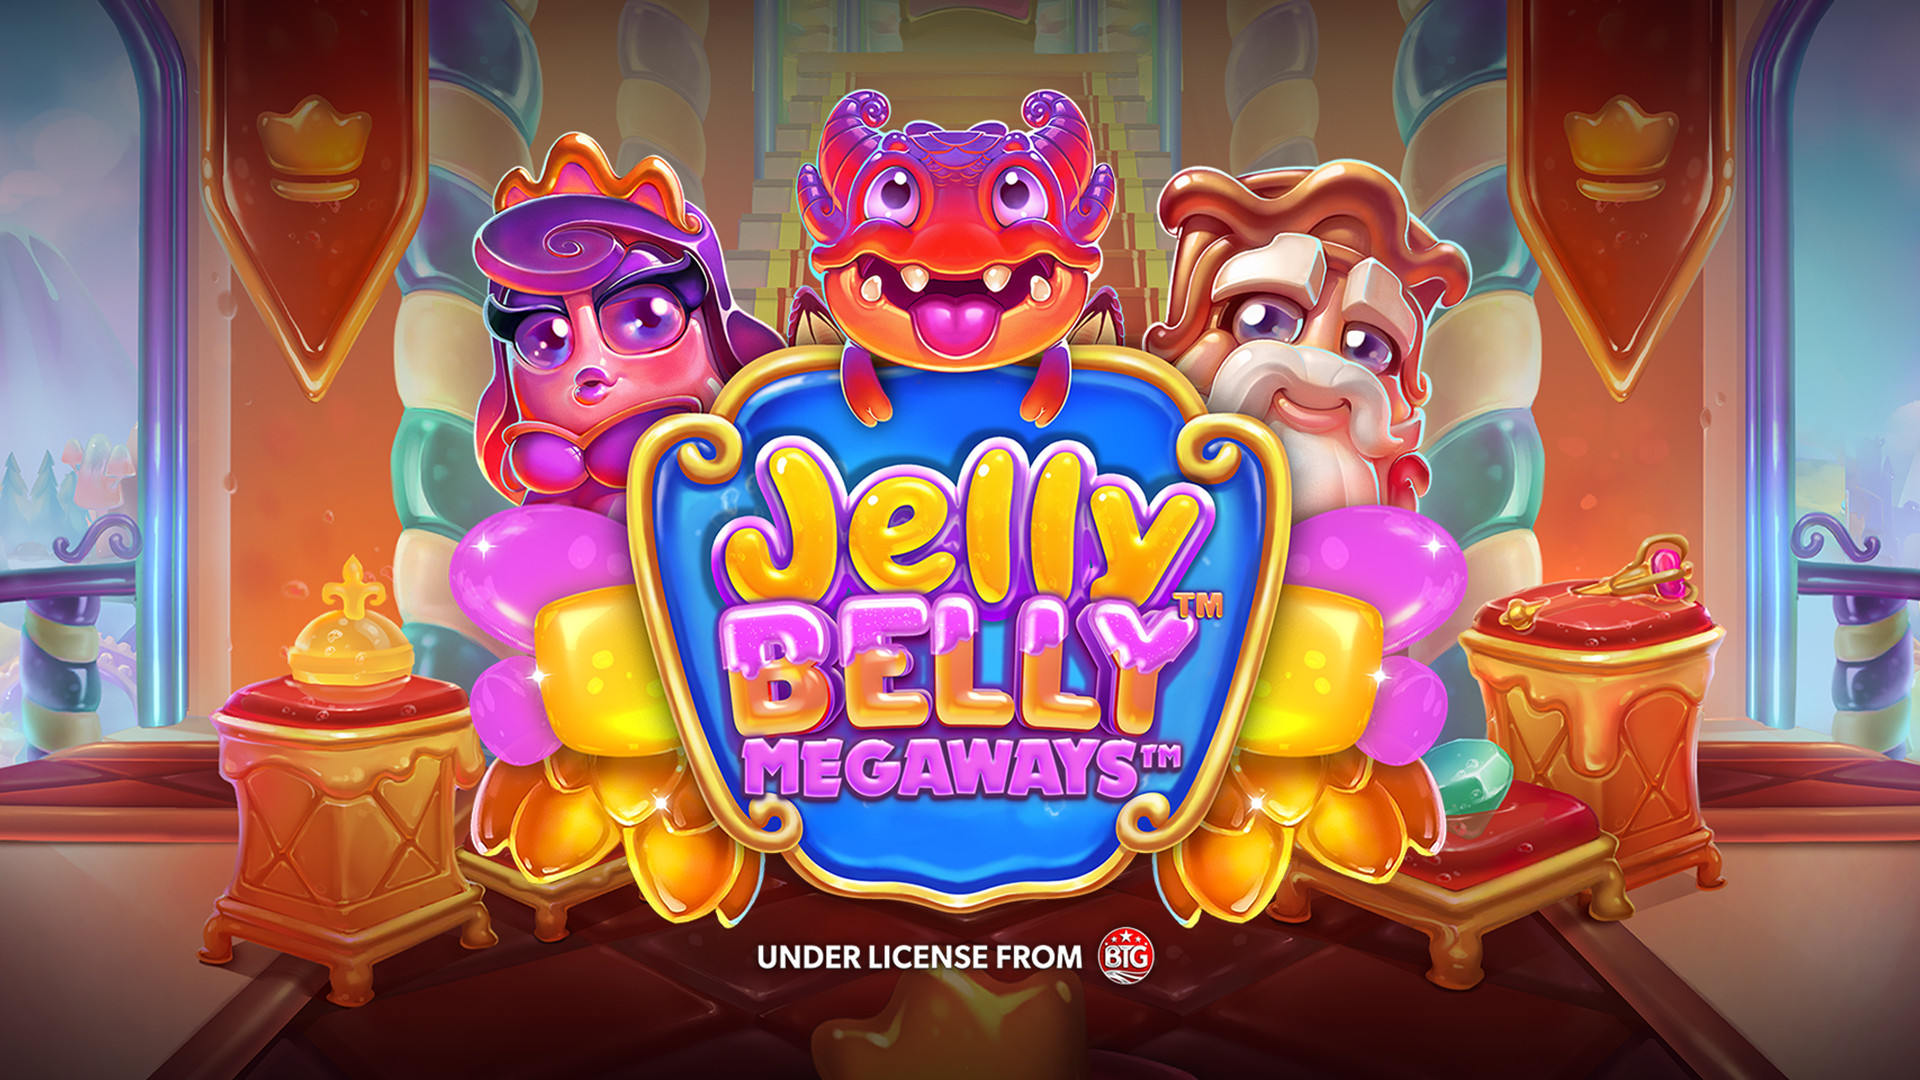 Jelly Belly MEGAWAYS